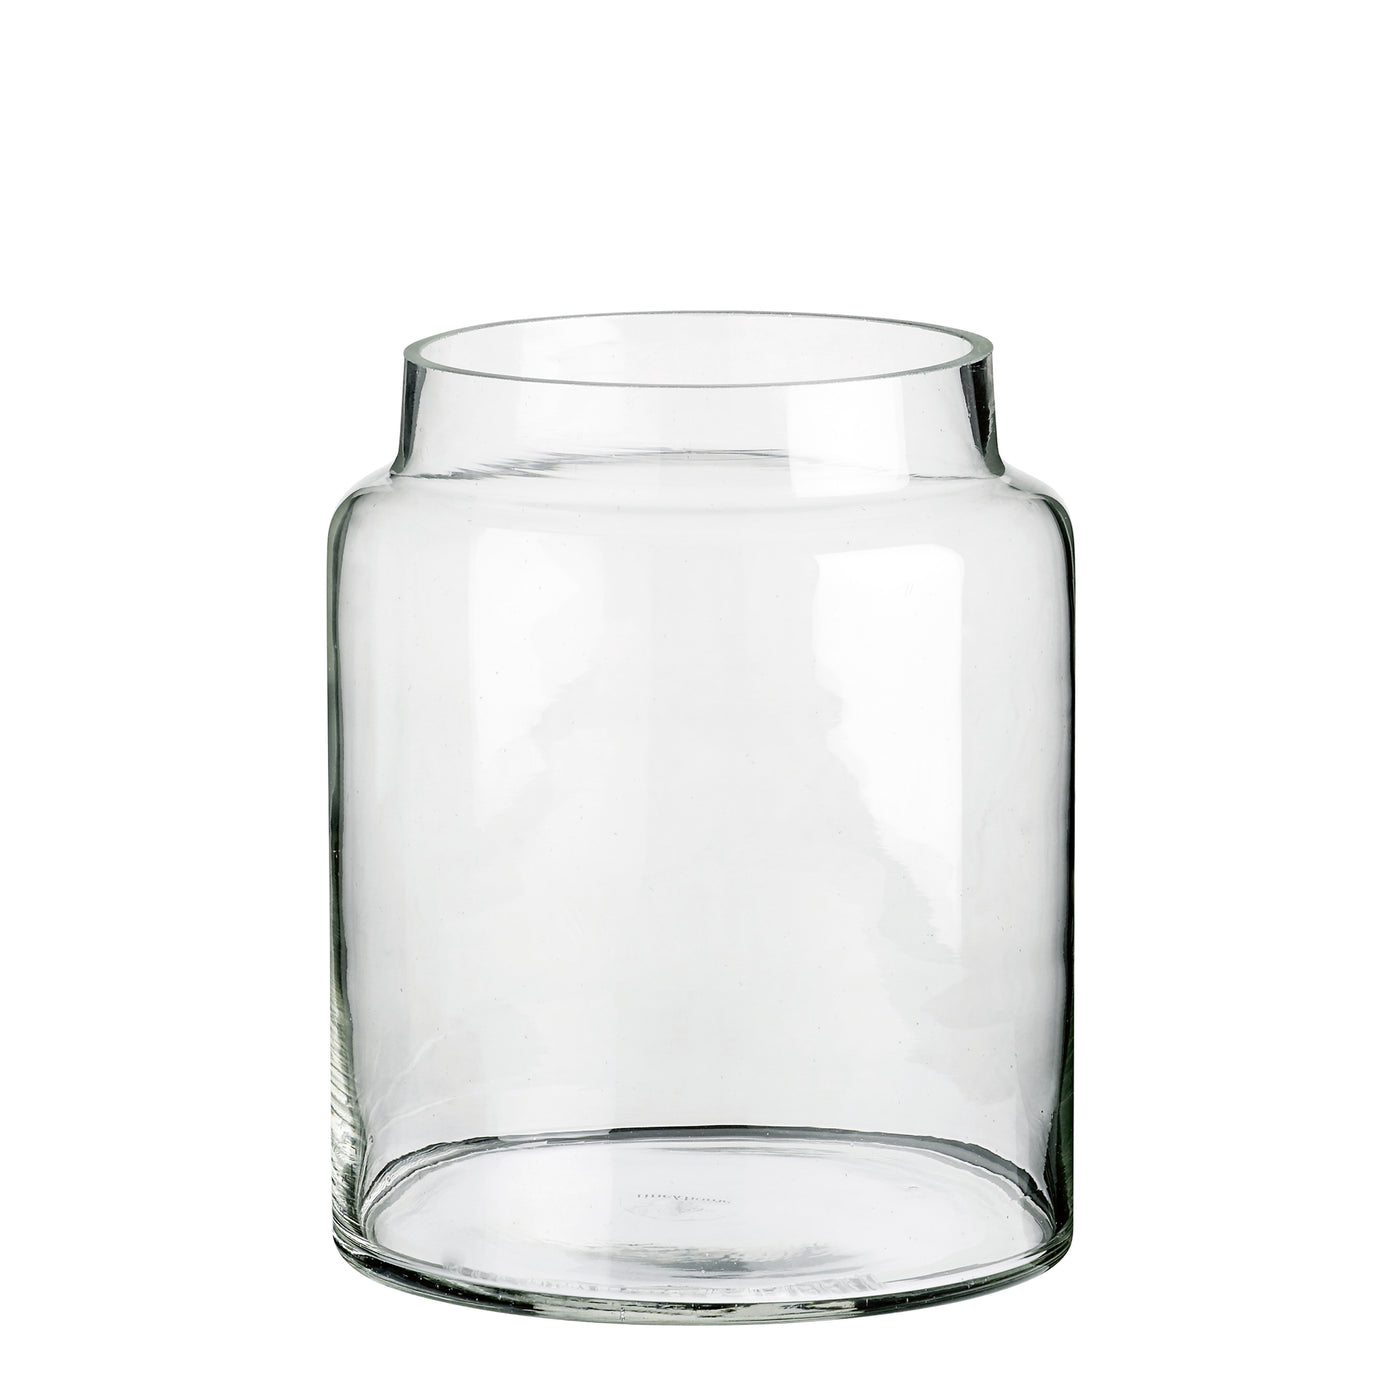 TF Glas Vase Small